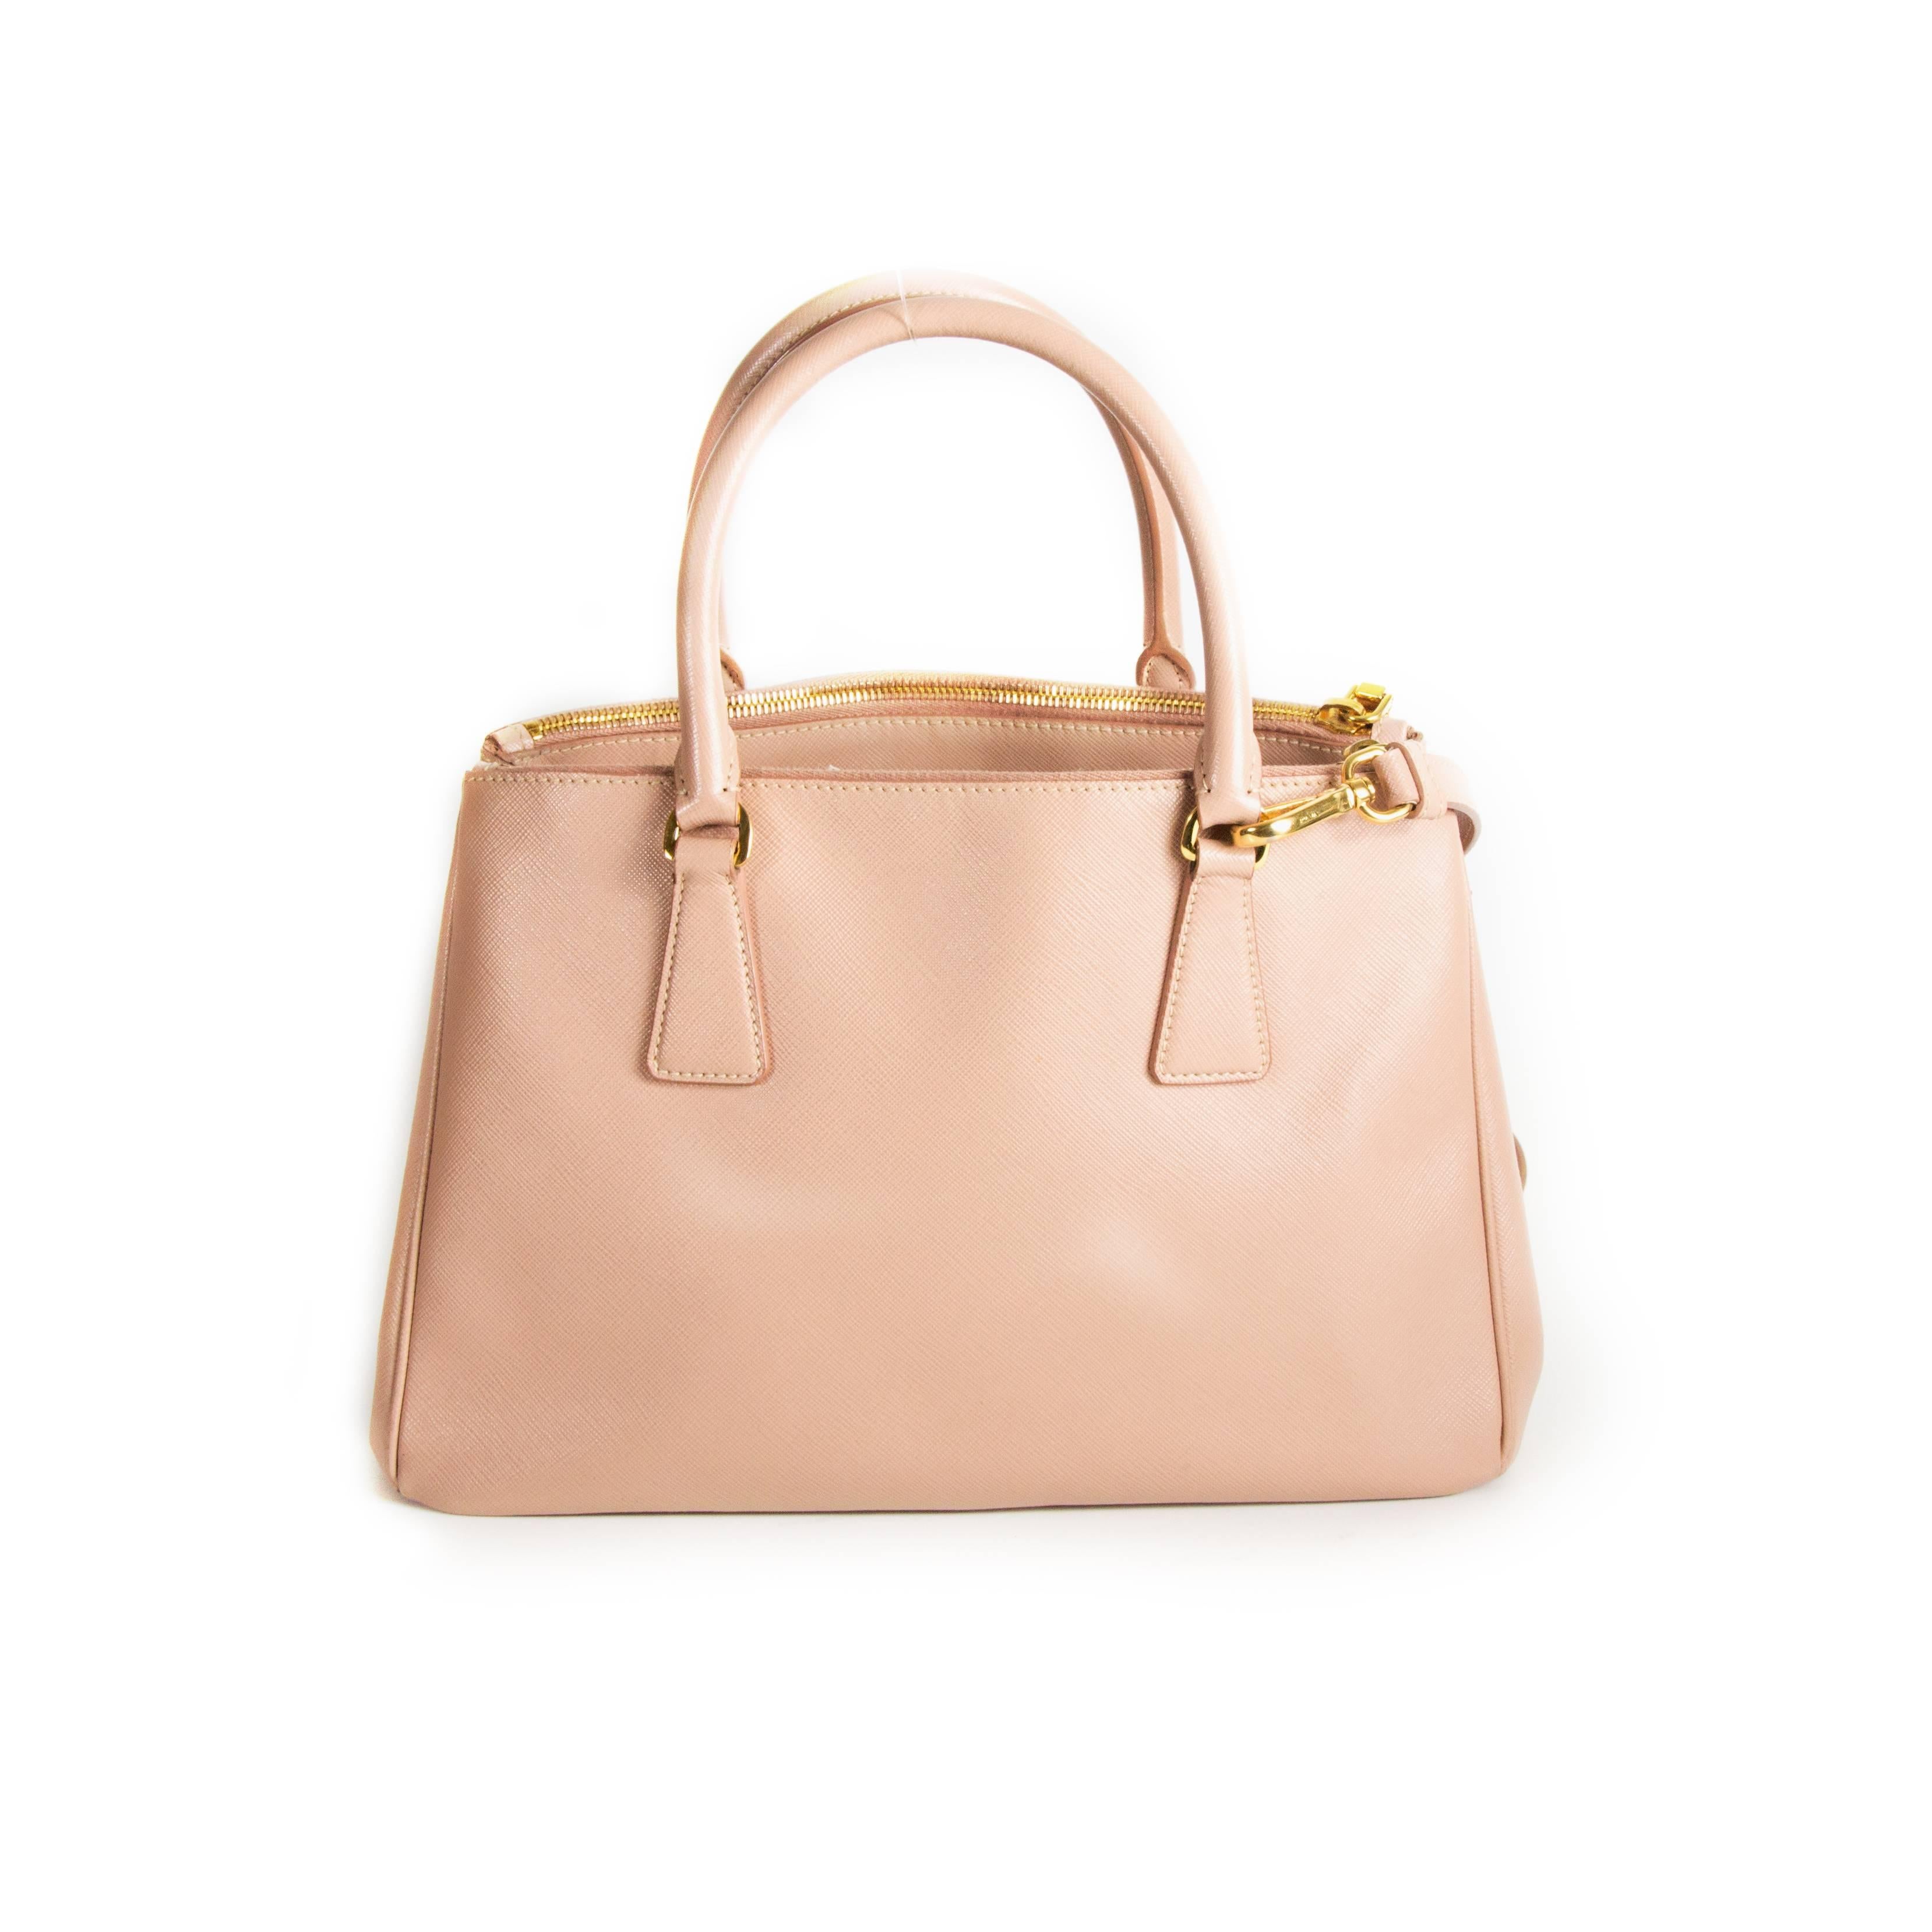 Prada - Satchel Bag

Color: Pale Pink

Material: Saffiano Leather

------------------------------------------------------------

Details:

- gold tone hardware

- dual rolled handles

- removable shoulder strap

- zip top